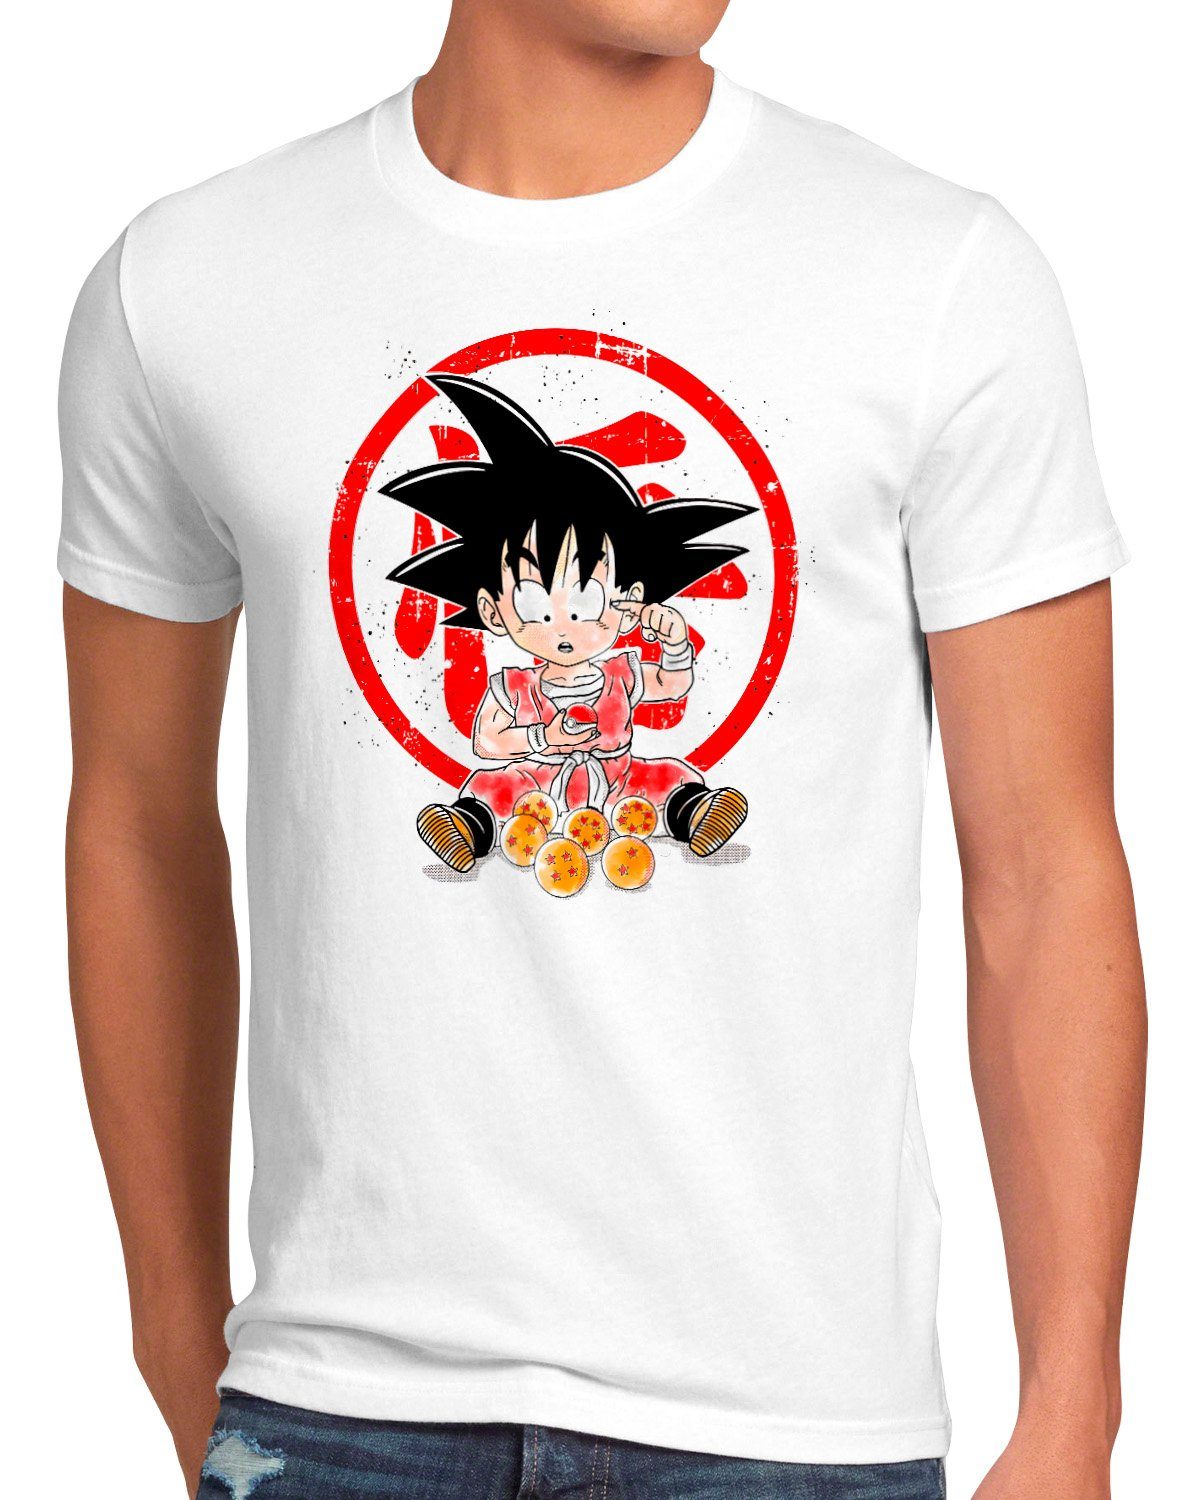 style3 Print-Shirt Herren T-Shirt Wrong Poke Ball super dragonball z gt songoku breakers the kakarot